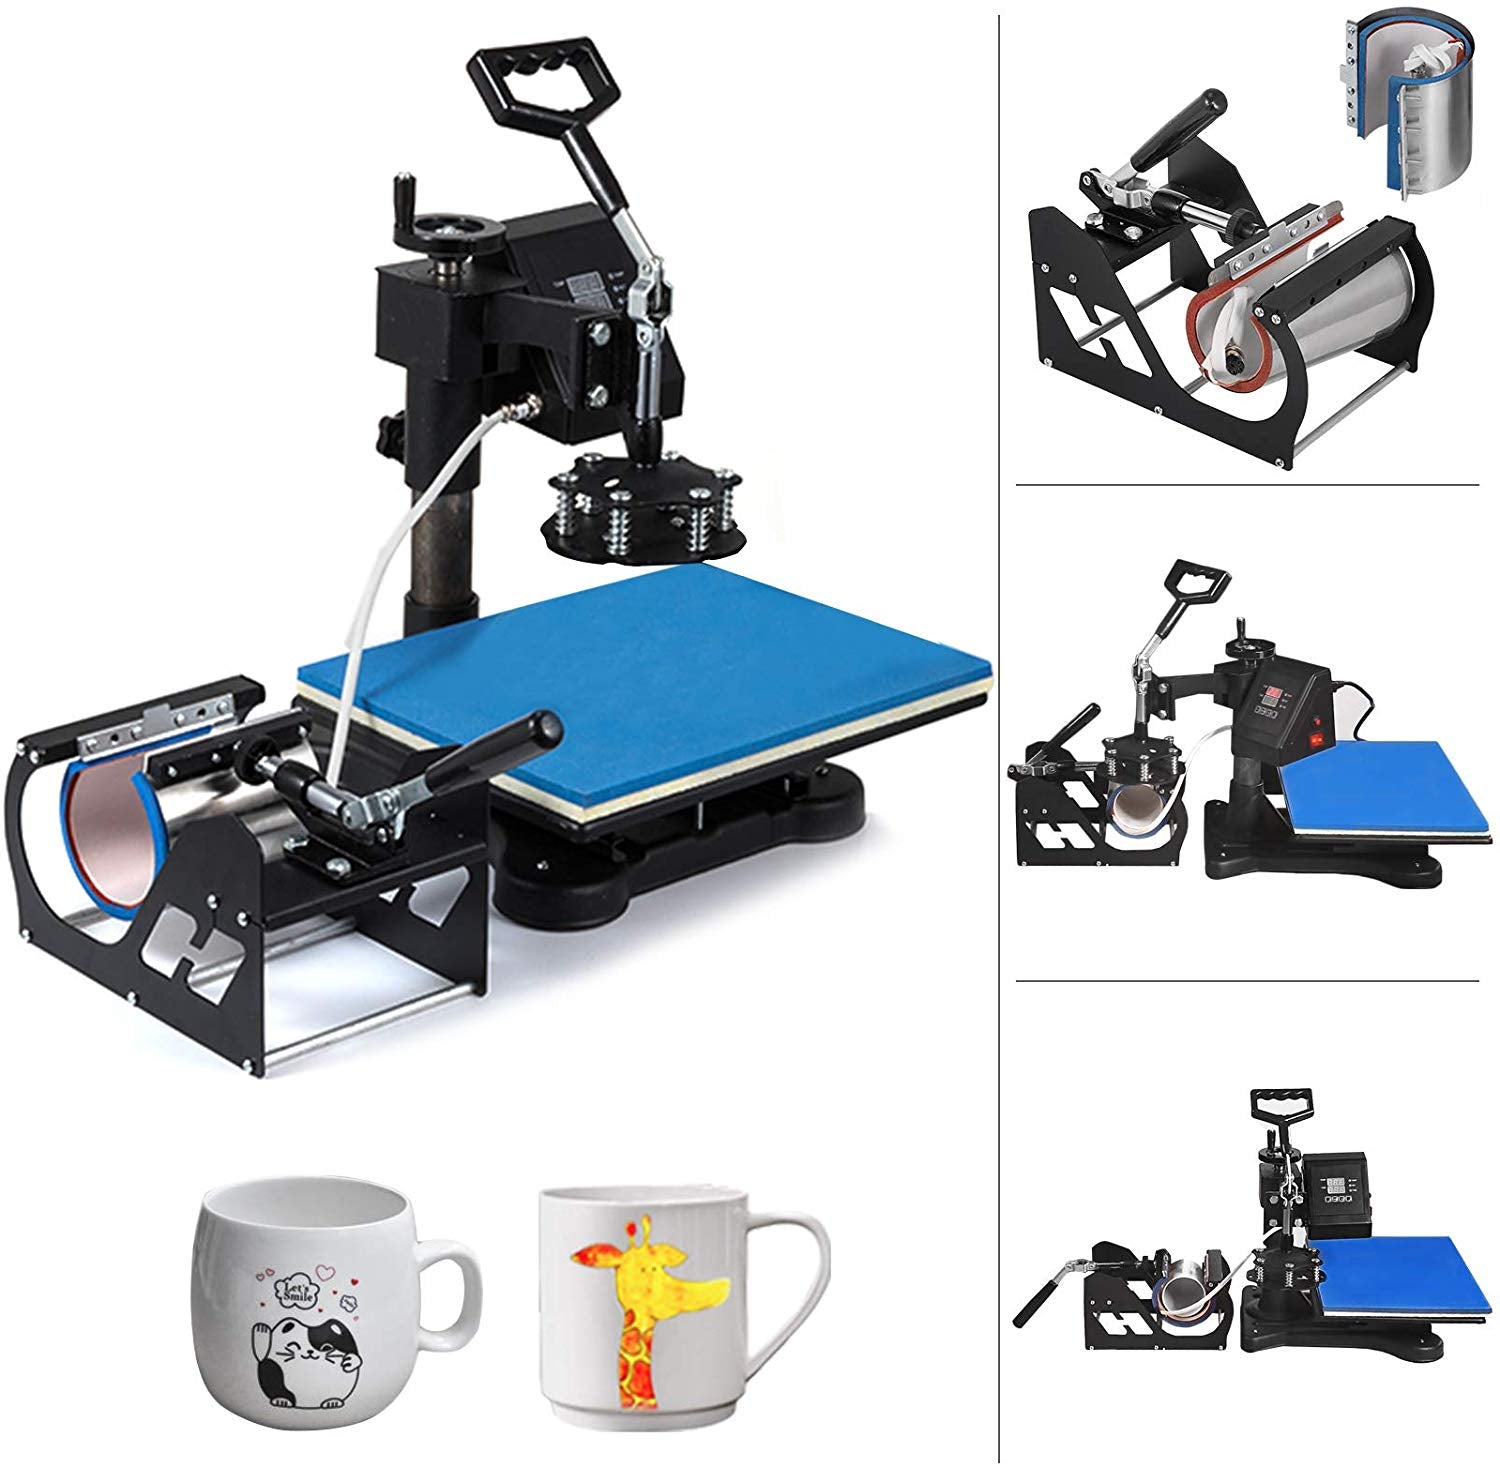 VEVOR 6 in 1 Heat Press 12x15 Black & Blue Heat Press Machine for DIY Mug,t-shirts